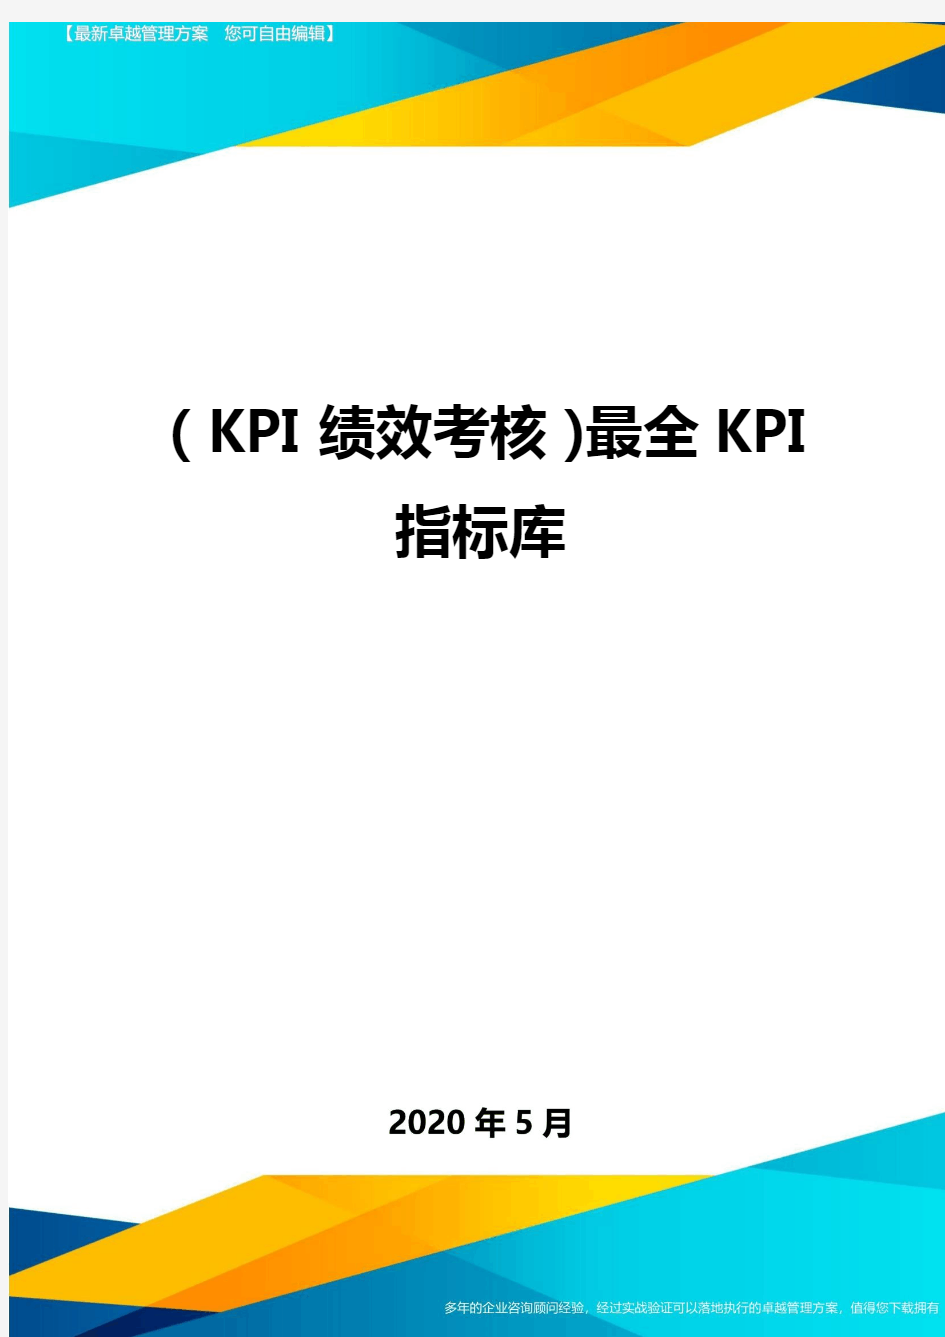 (KPI绩效考核)最全KPI指标库